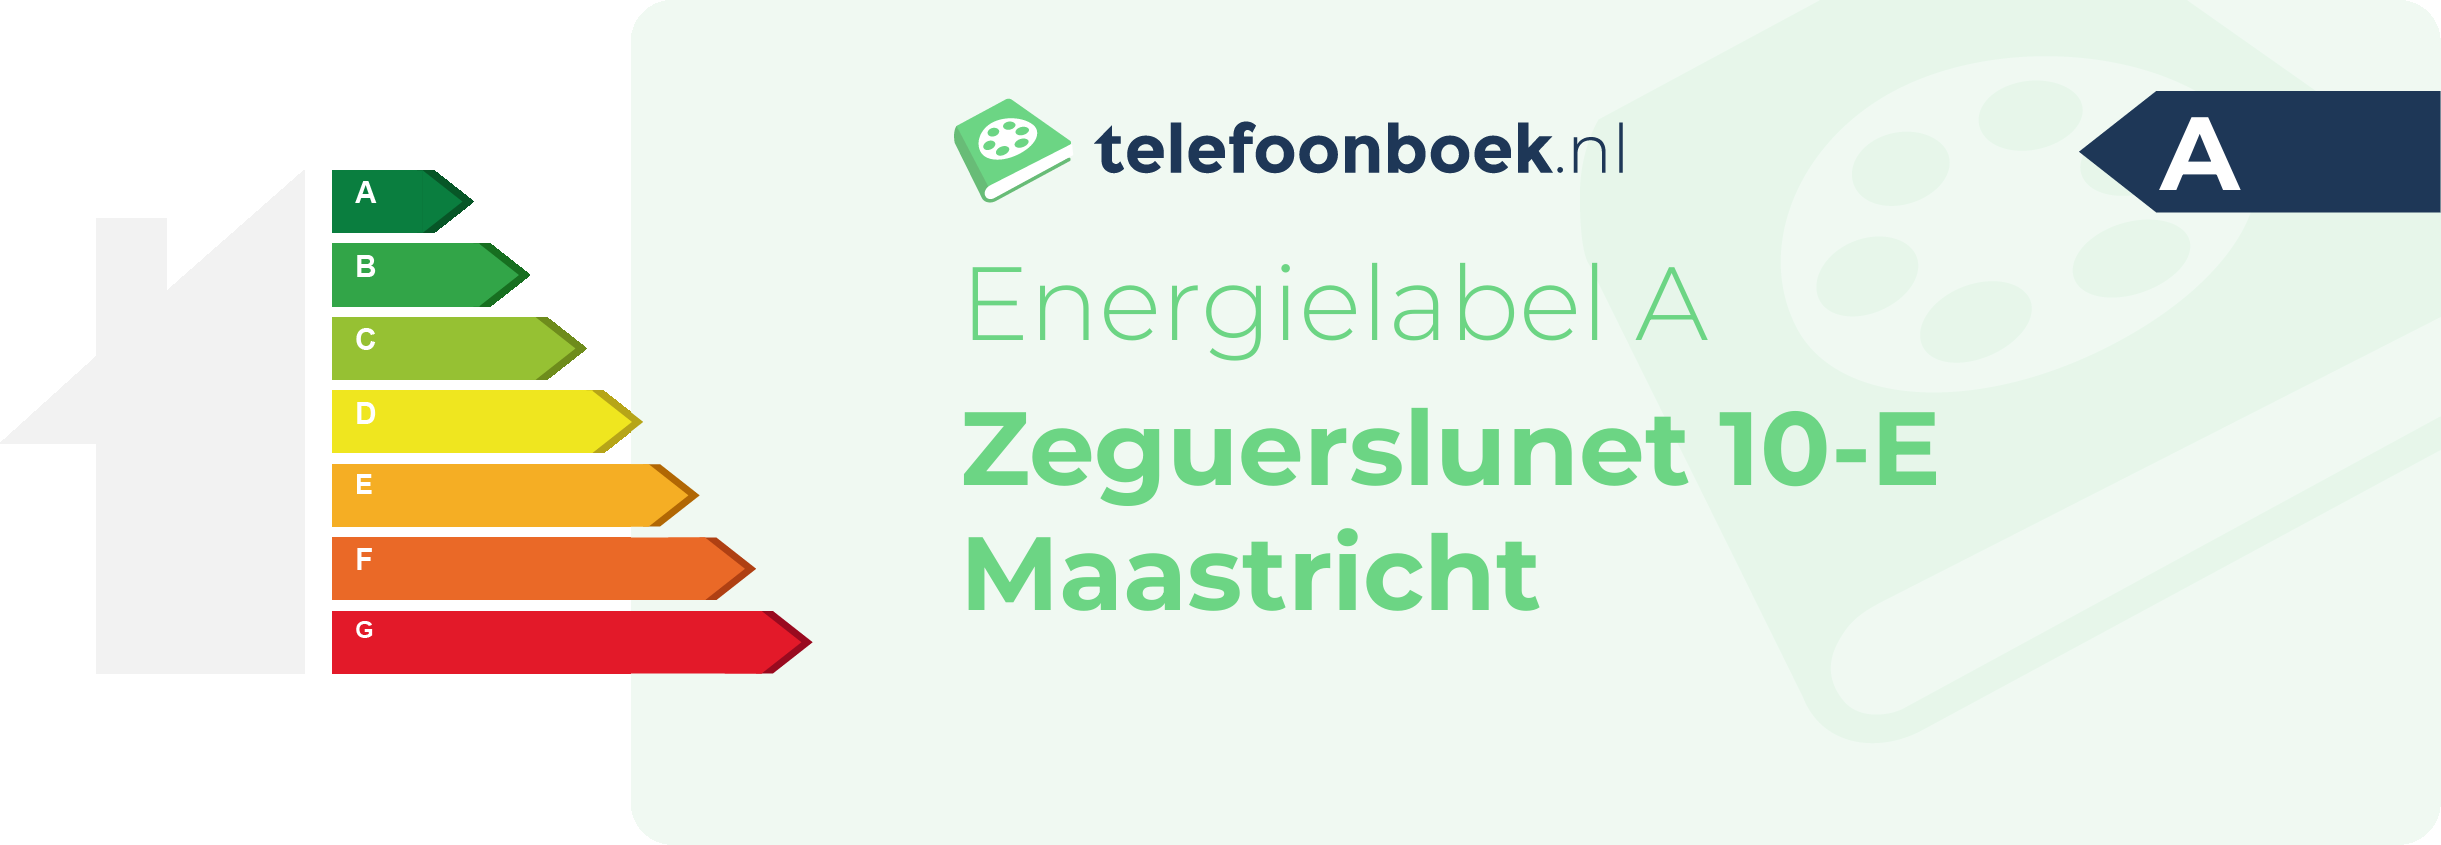 Energielabel Zeguerslunet 10-E Maastricht